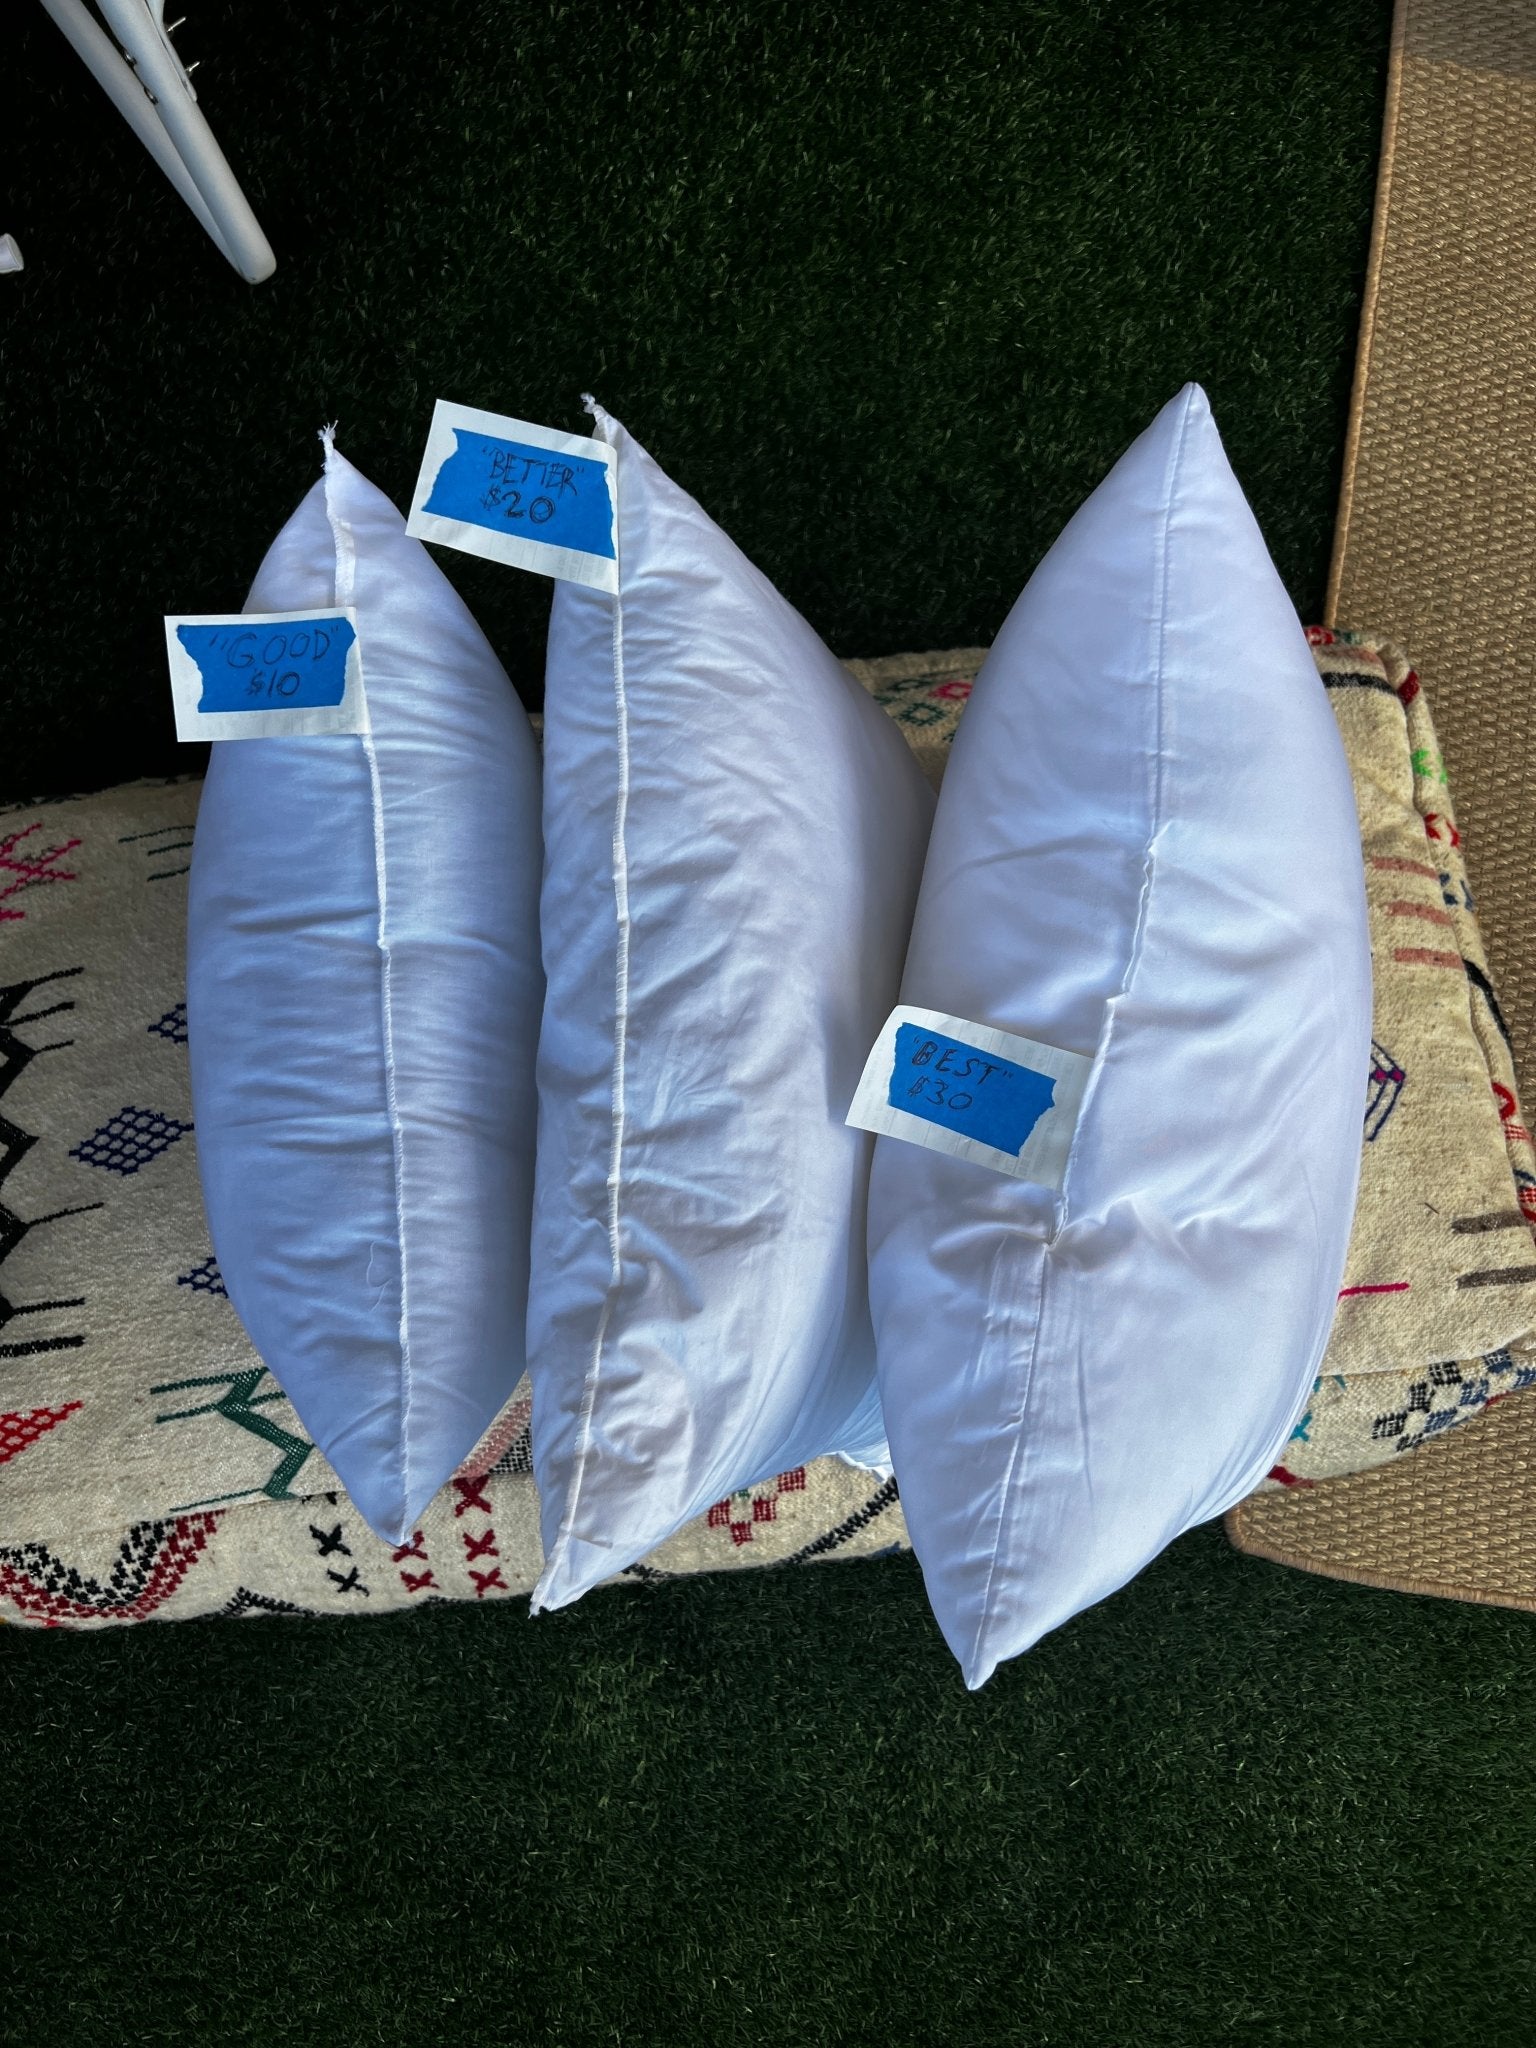 Pillow Insert - “Best” AKA Magic Cloud | Banana Manor Rug Company